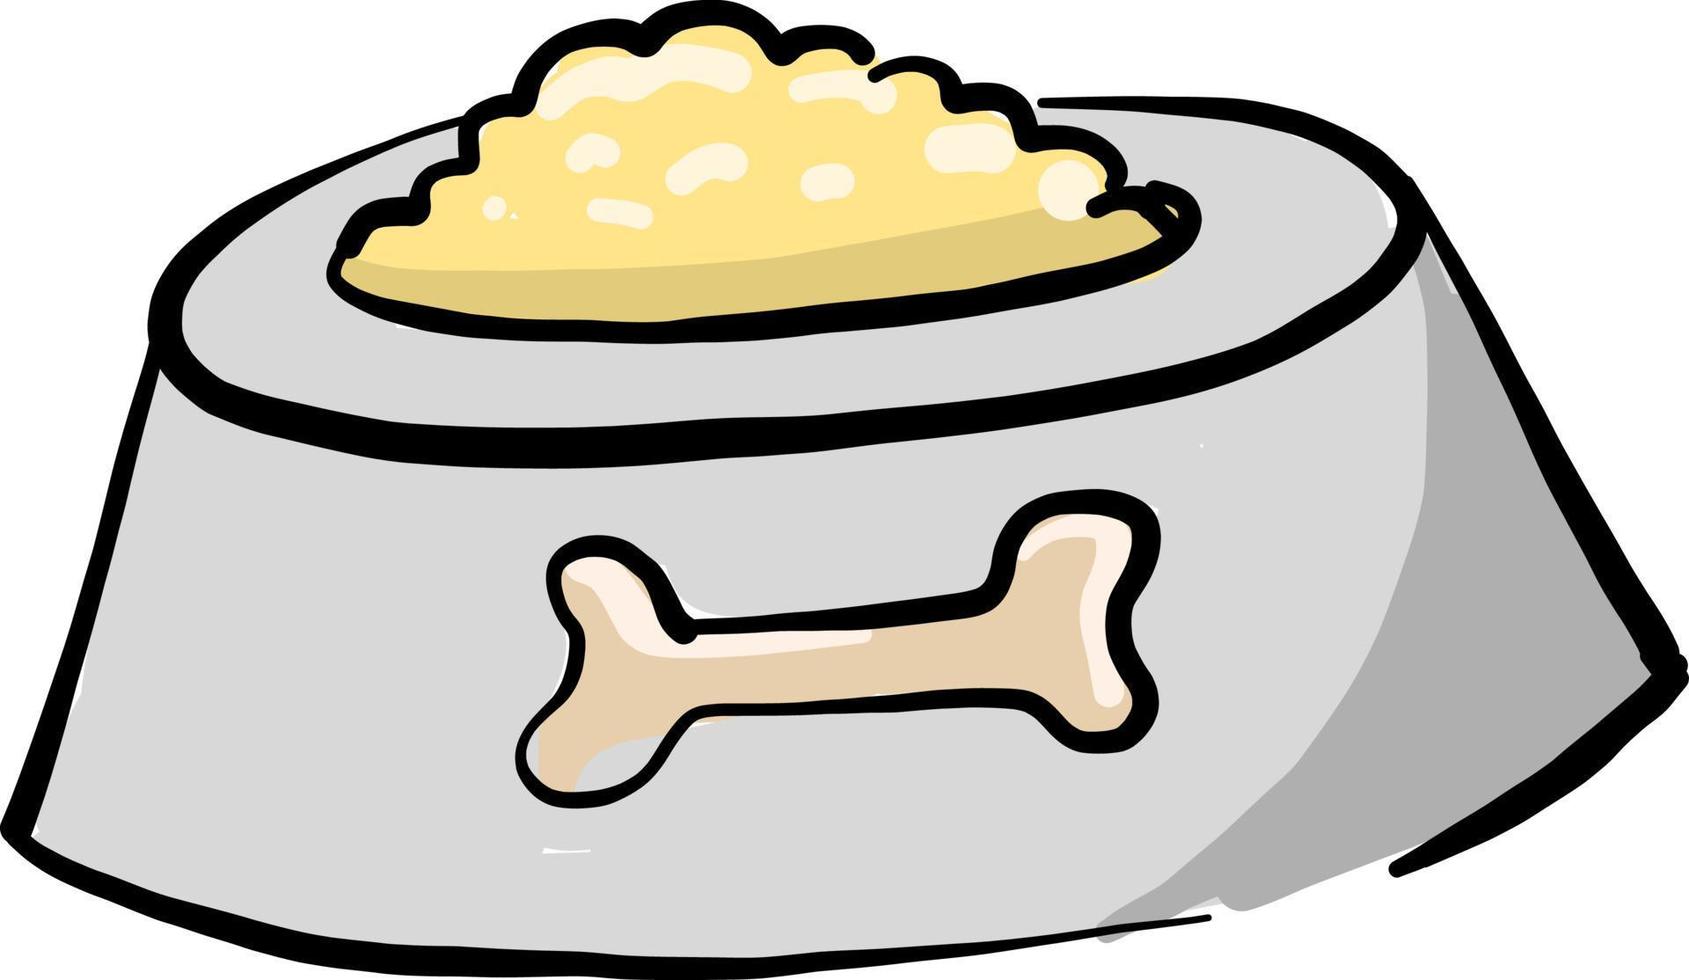 Dog food in bowl, illustration, vector on white background